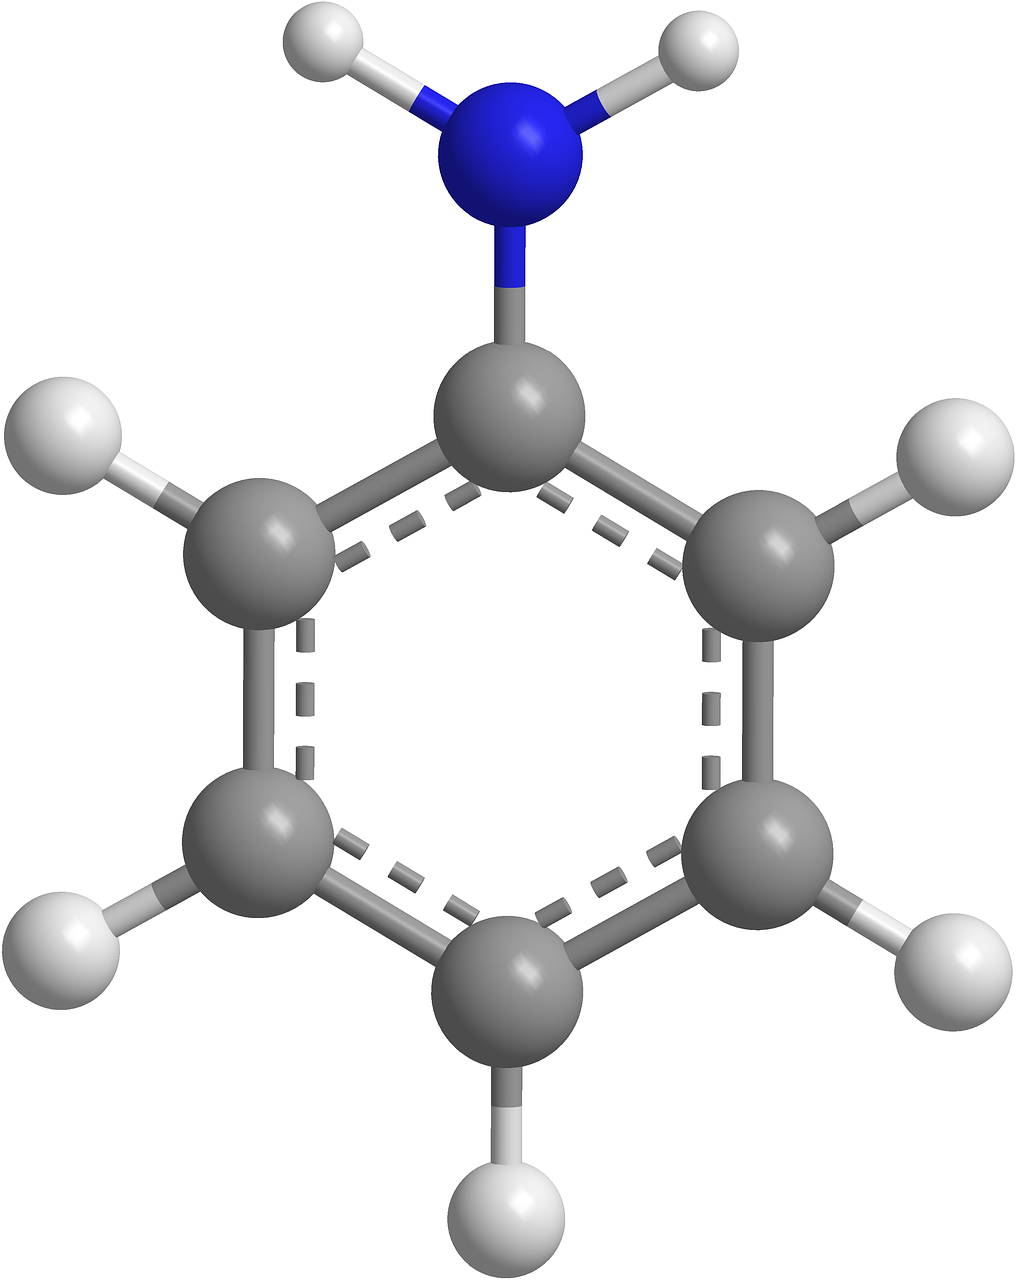 aniline quimcia organic molecula free photo